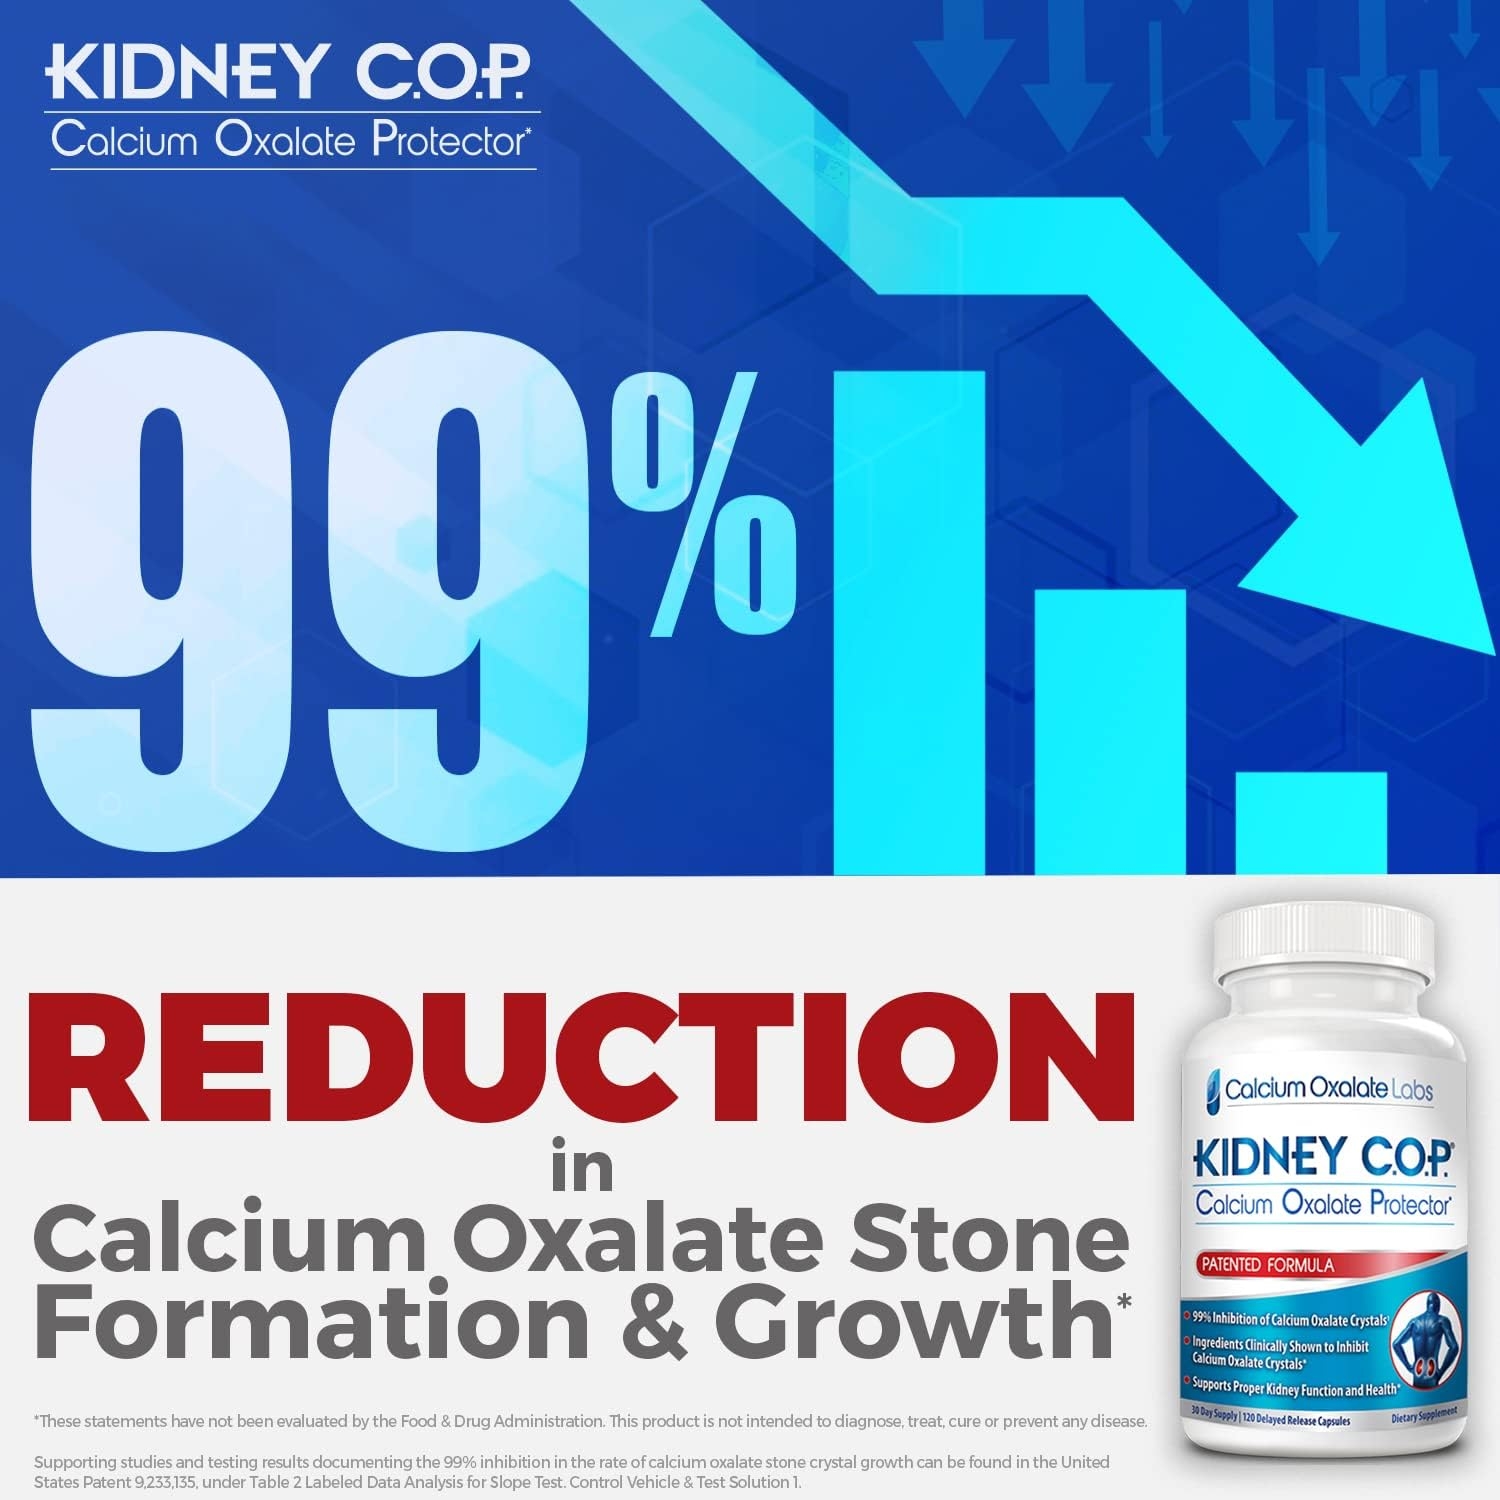 Kidney COP Calcium Oxalate Protector 120 Capsules, Patented Kidney Support for Calcium Oxalate Crystals, Helps Stops Recurrence of Stones, Stronger Than Chanca Piedra Stone Breaker Supplements